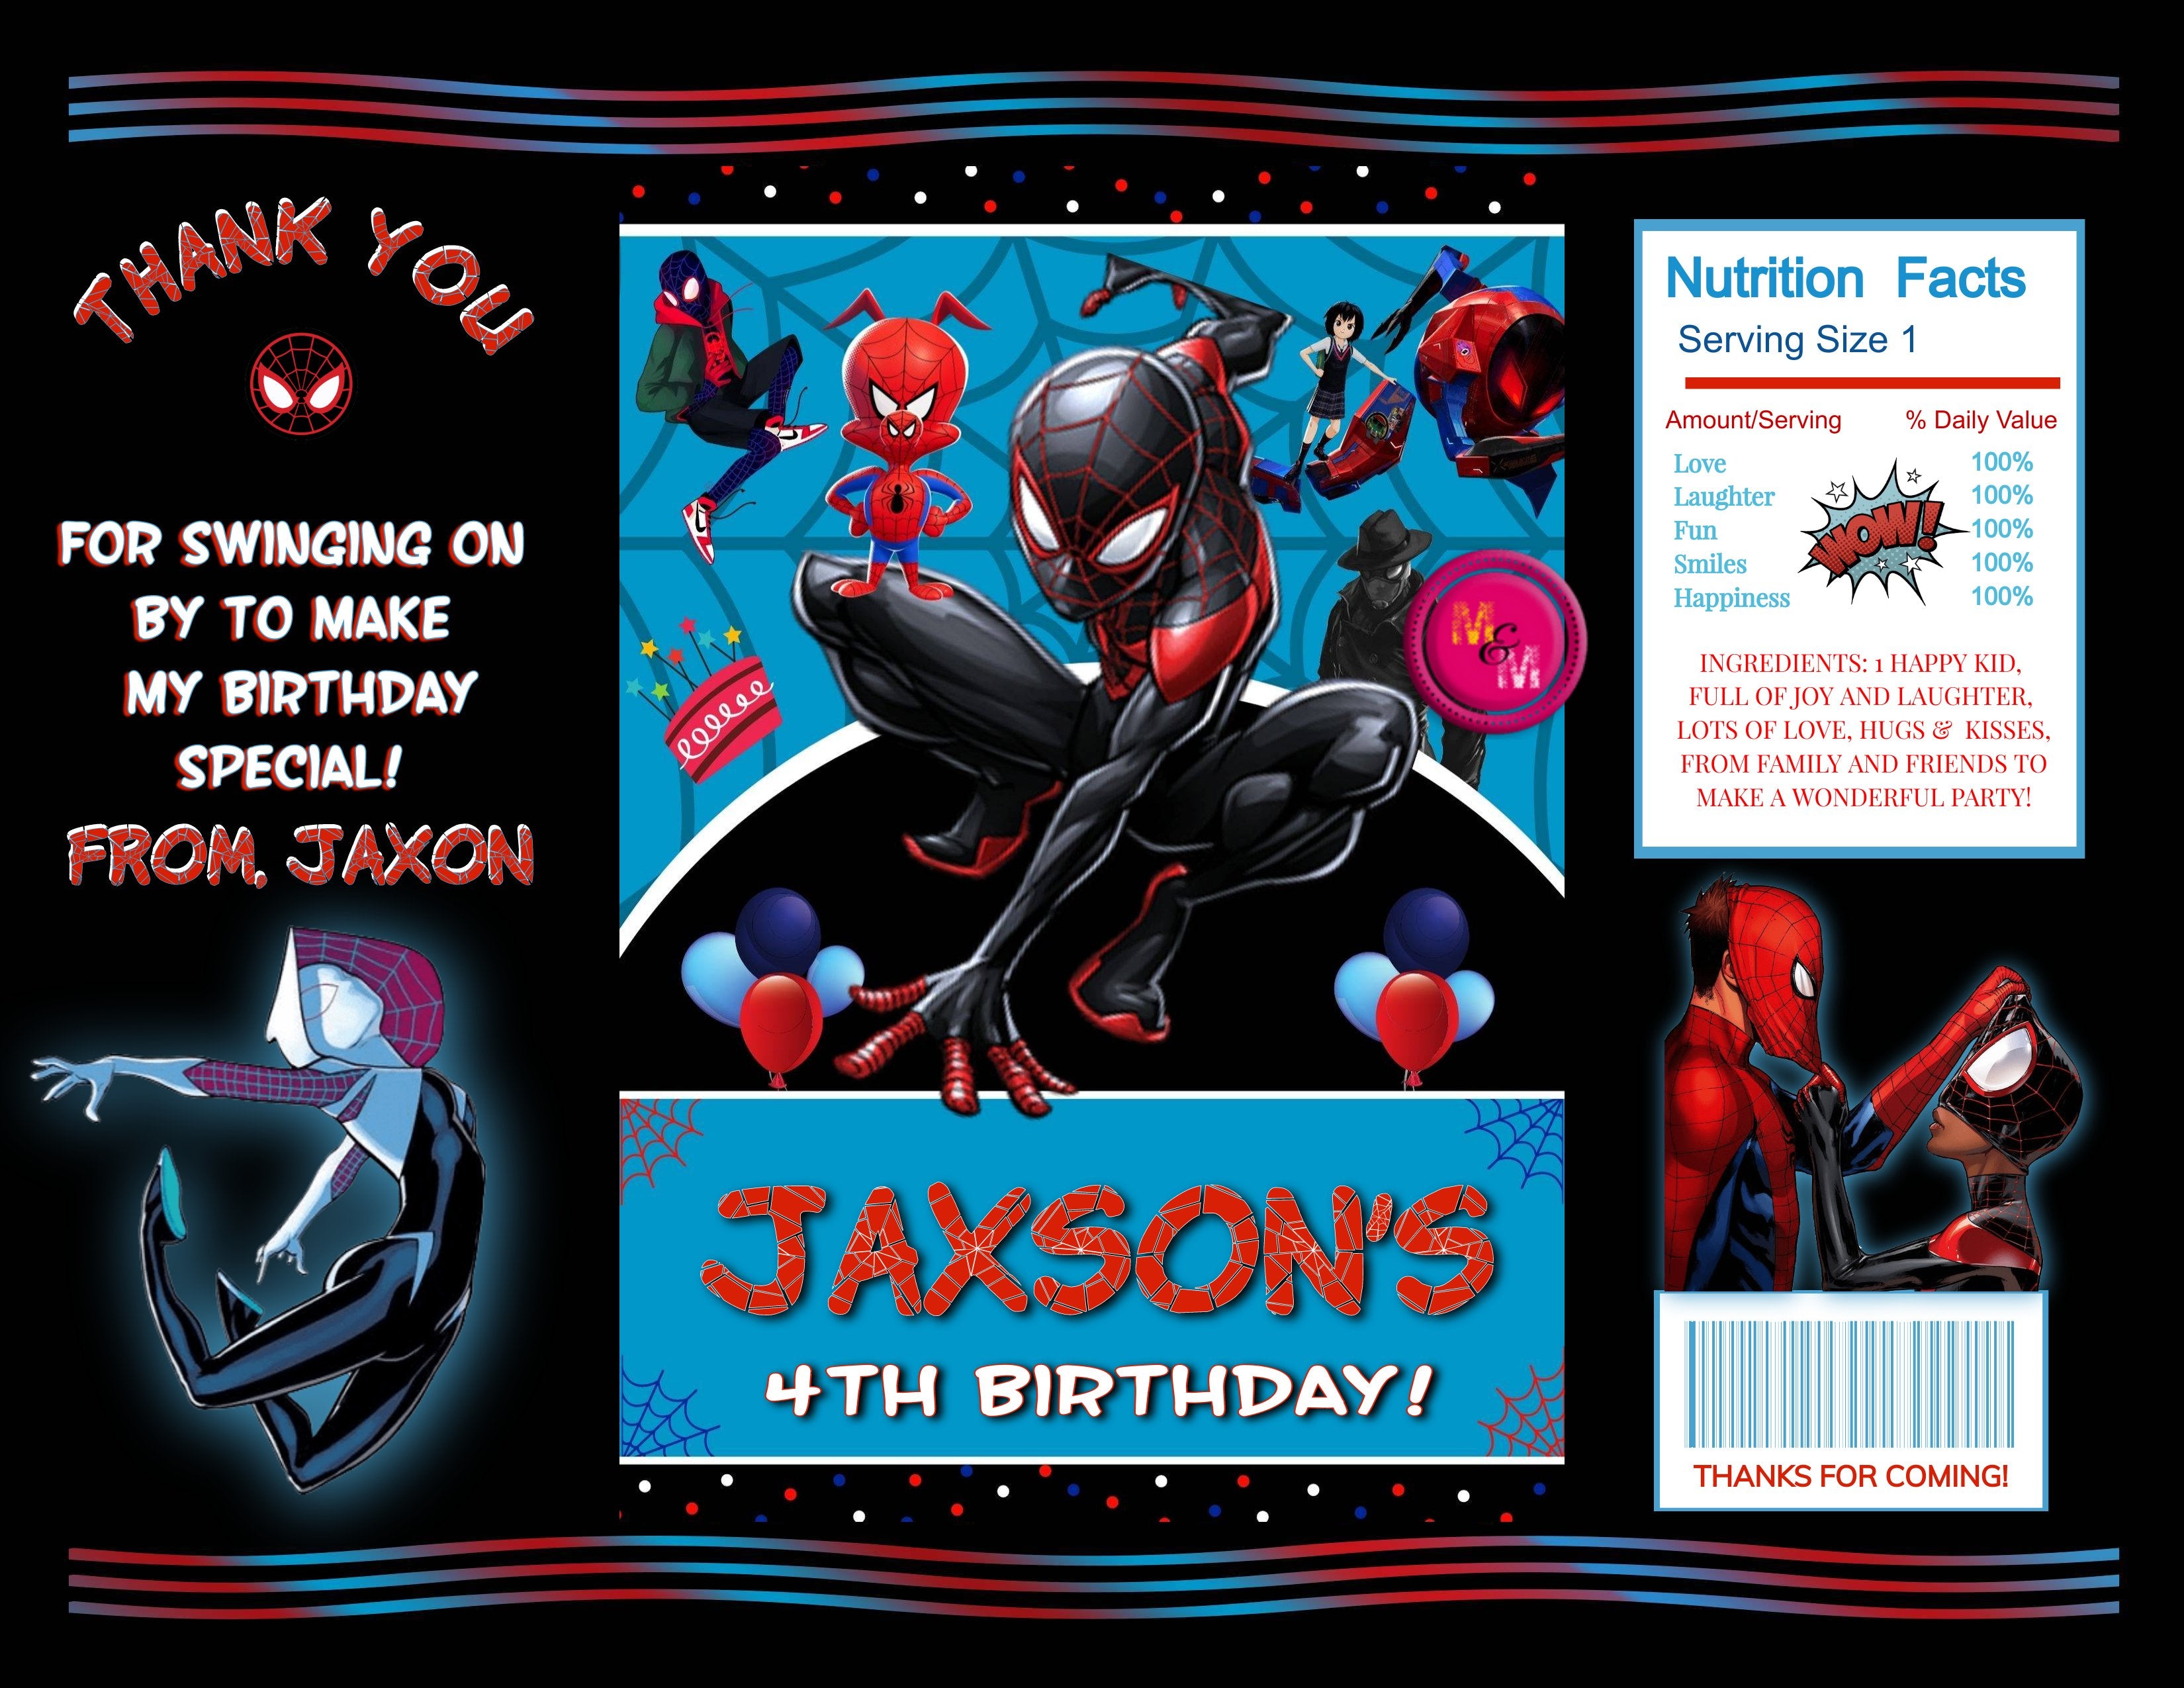 Editable Spider Hero Chip Bag Set, Superhero Party